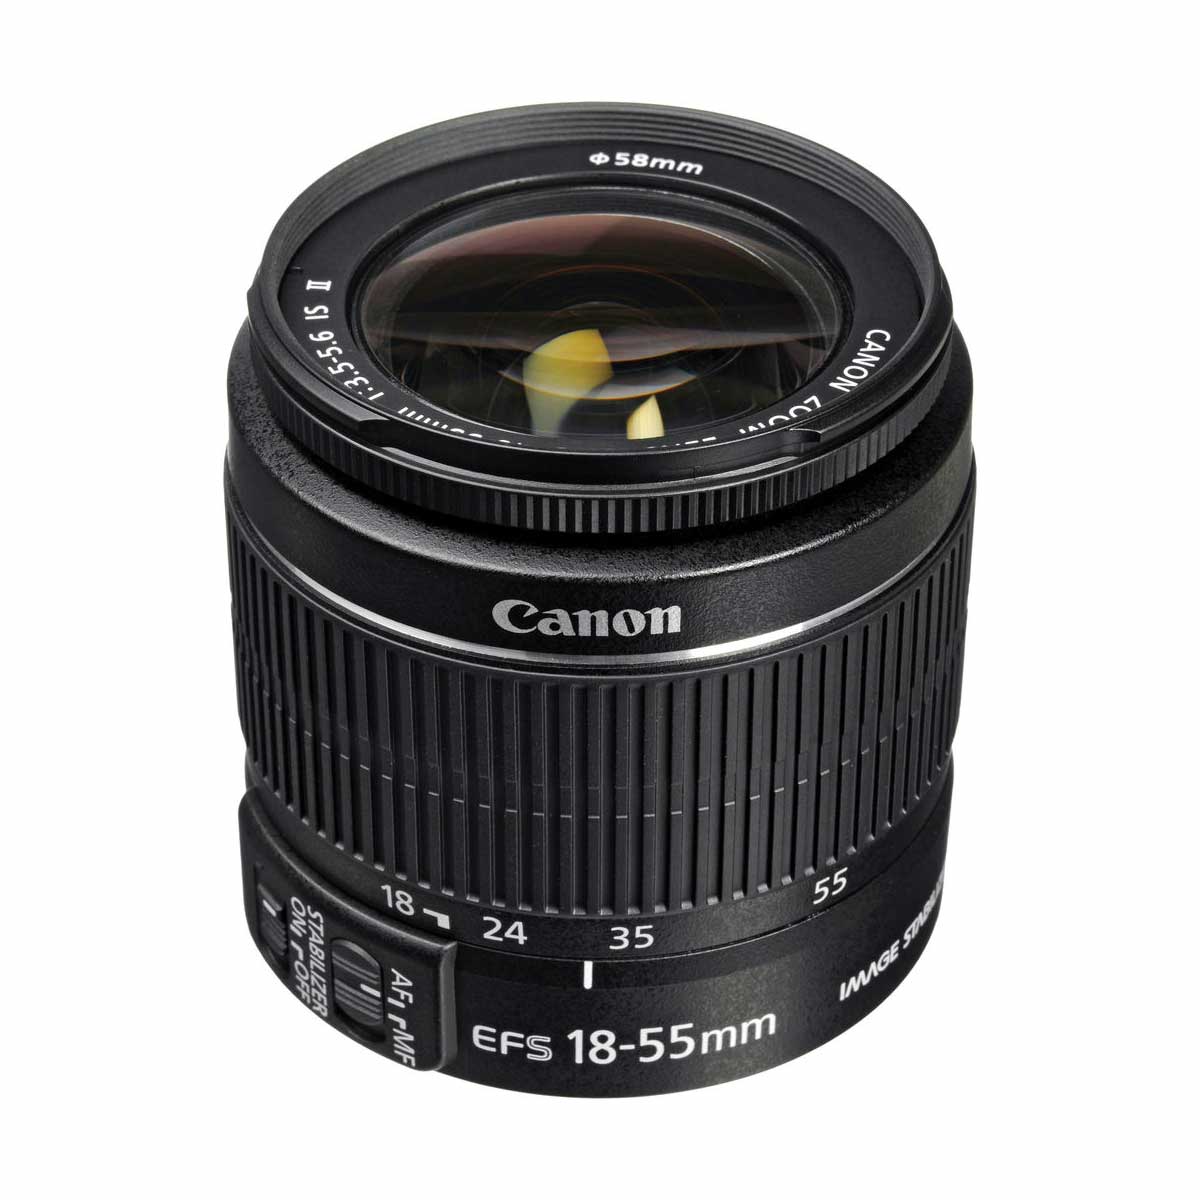 Canon EF-S 18-55mm f3.5-5.6 IS II Lens